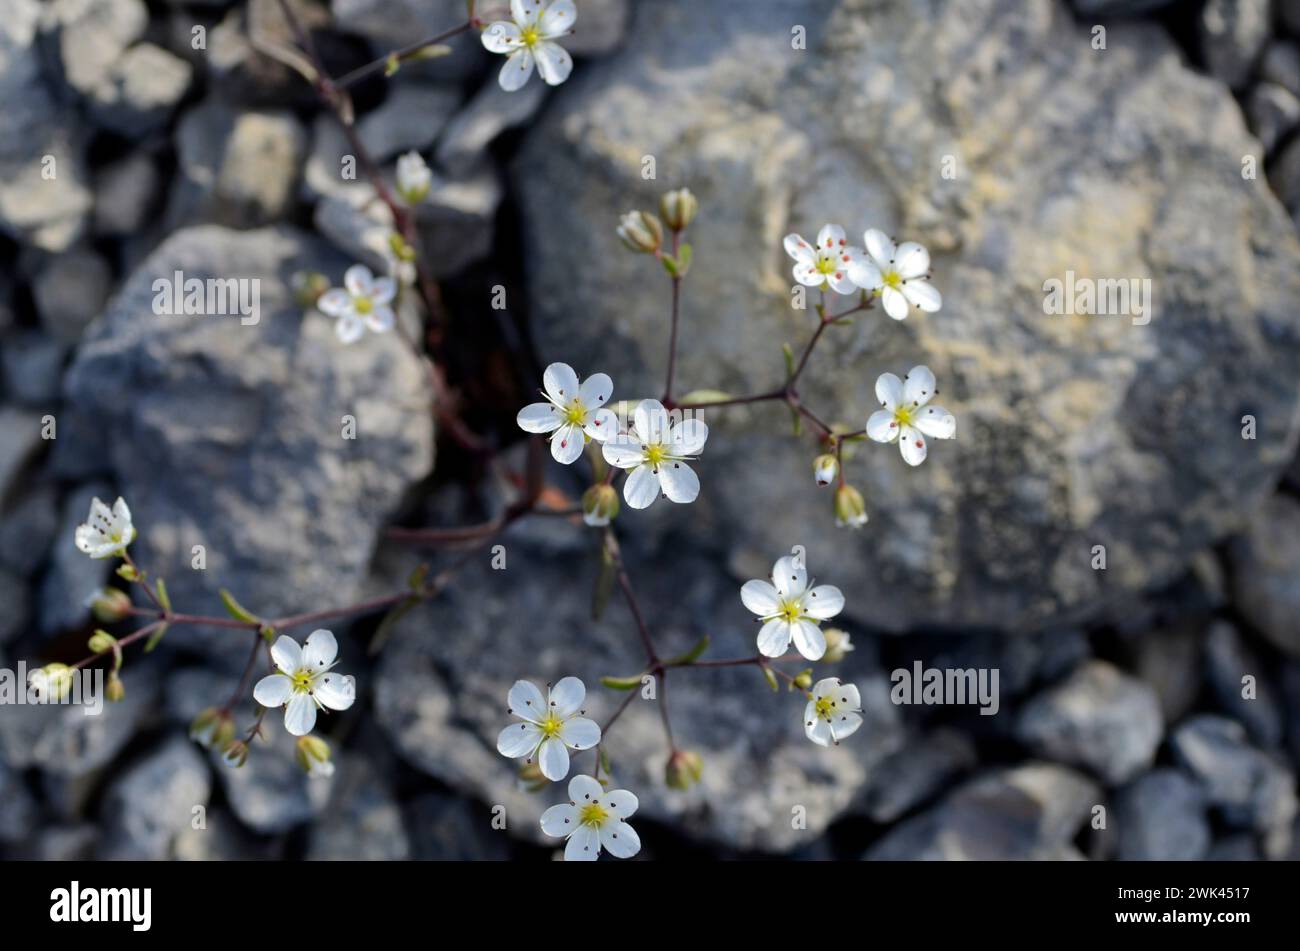 Saxifraga tridactylites in flower. Grows in stony soils Stock Photo